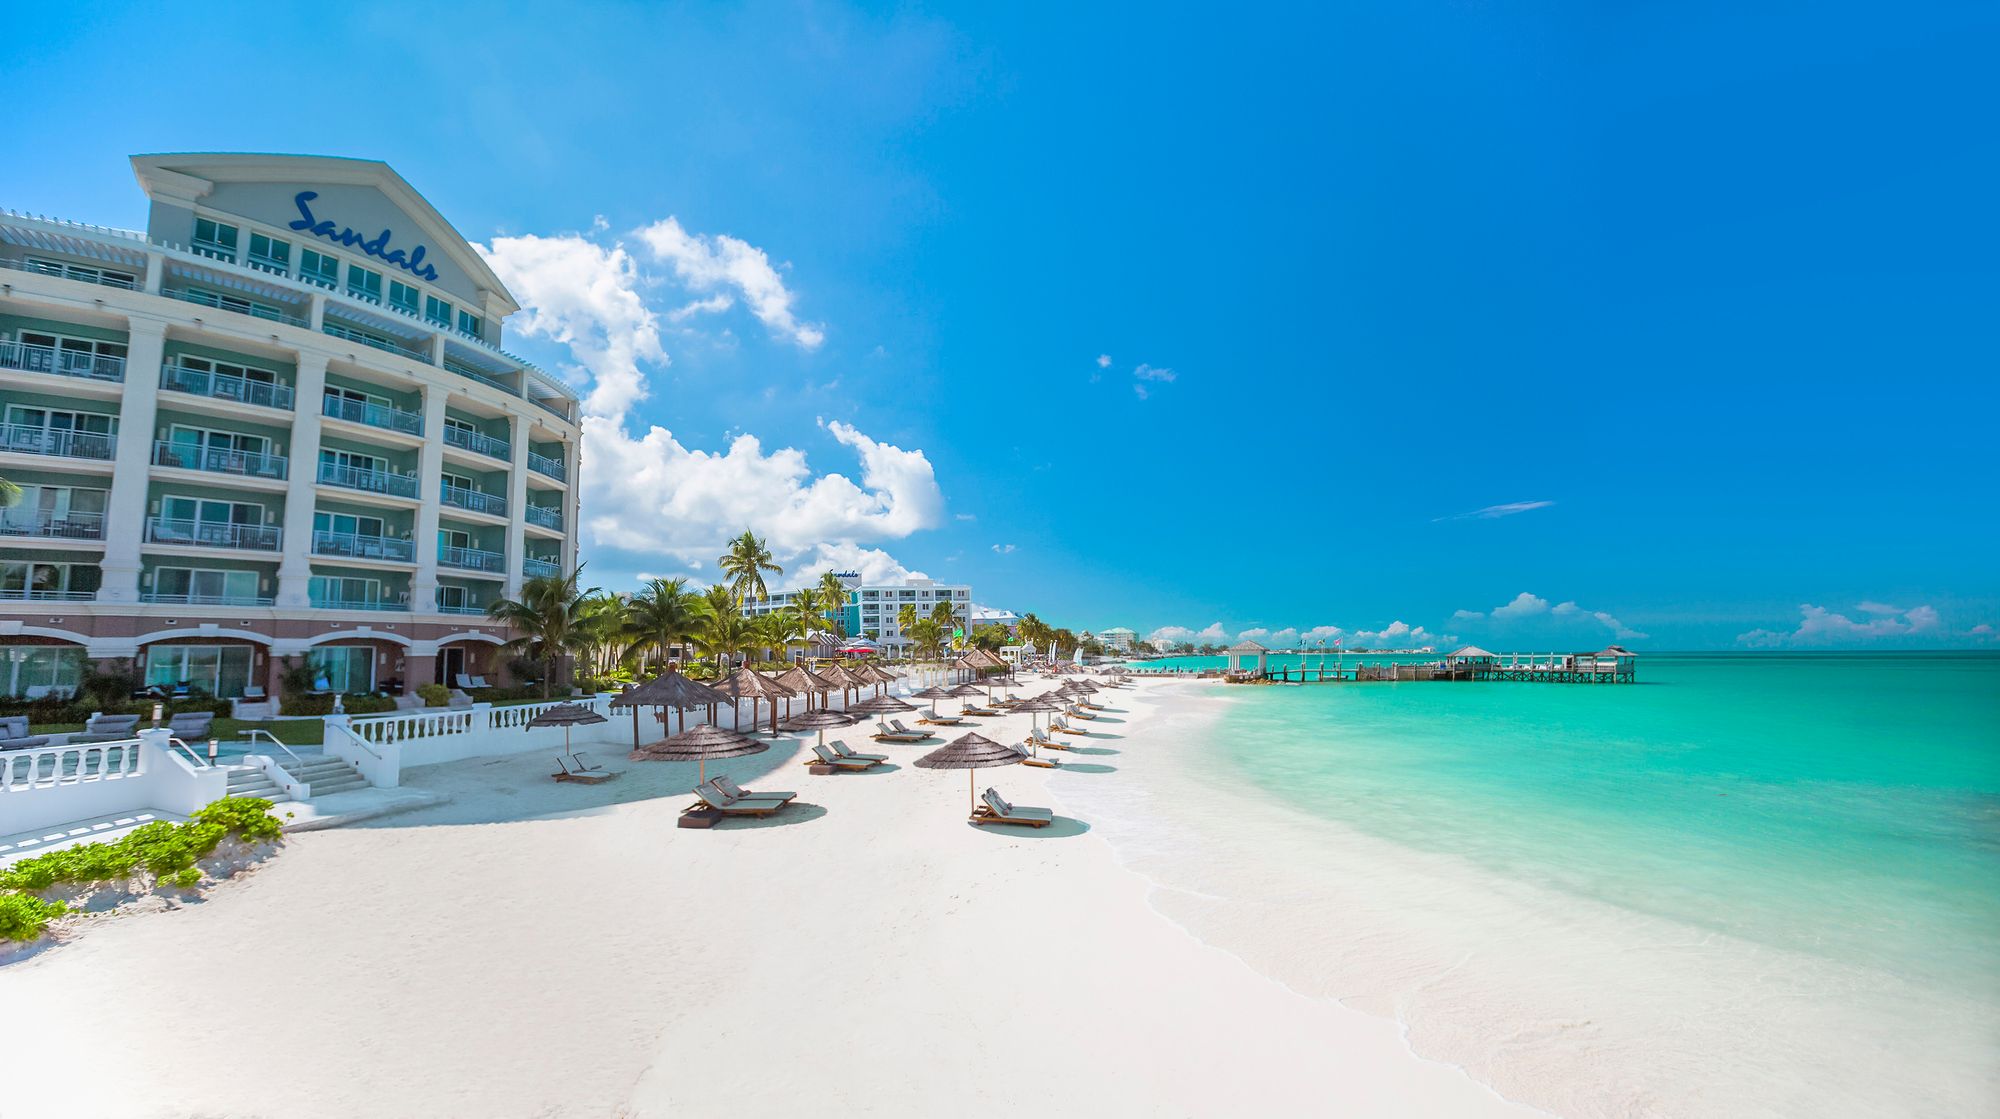 Sandals Royal Bahamian resort beach